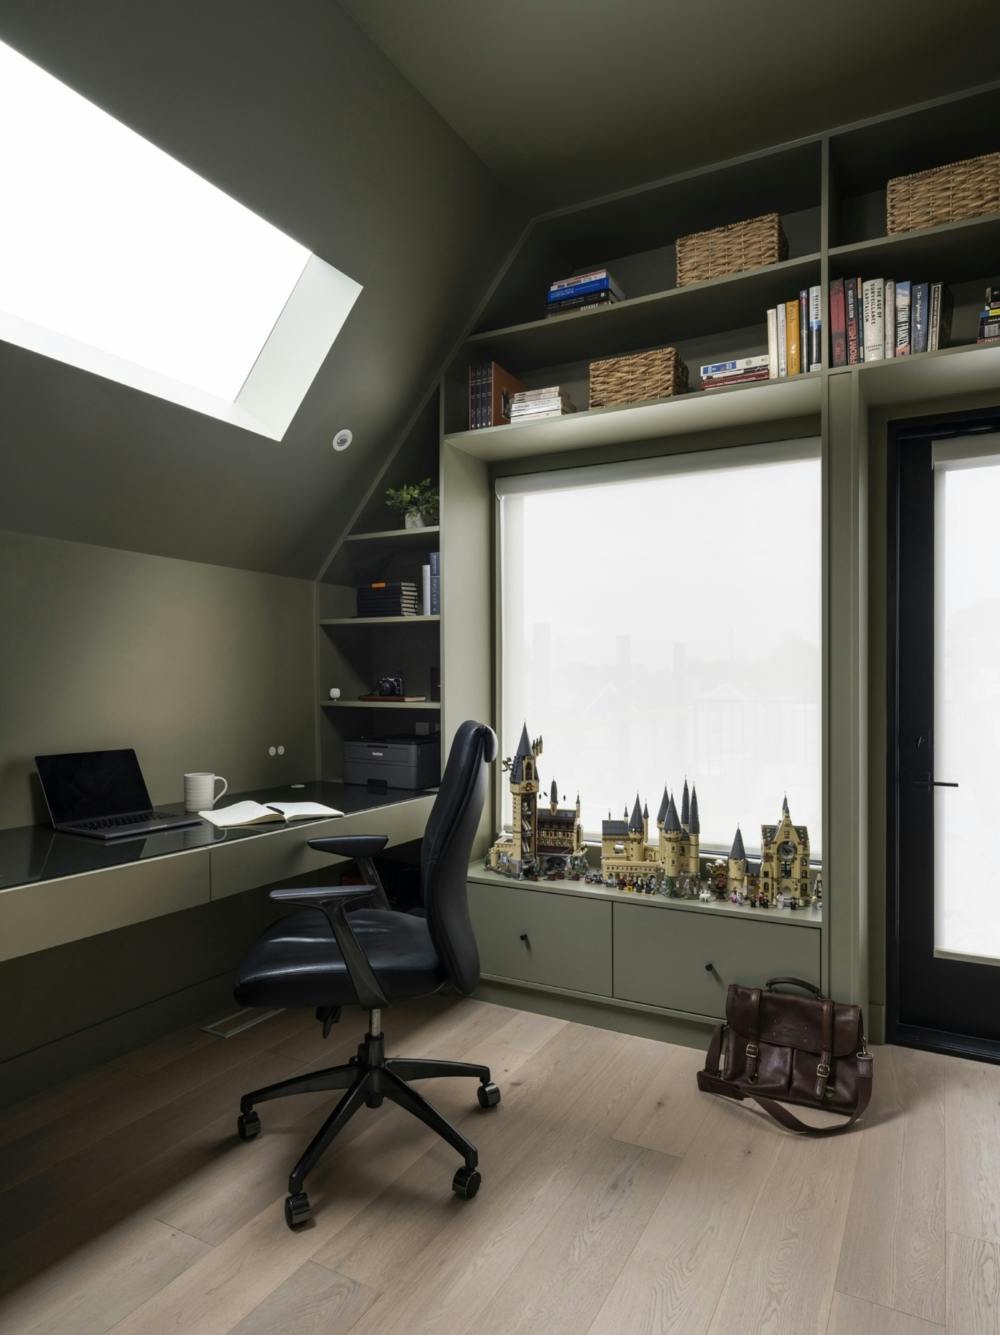 Third-storey office space